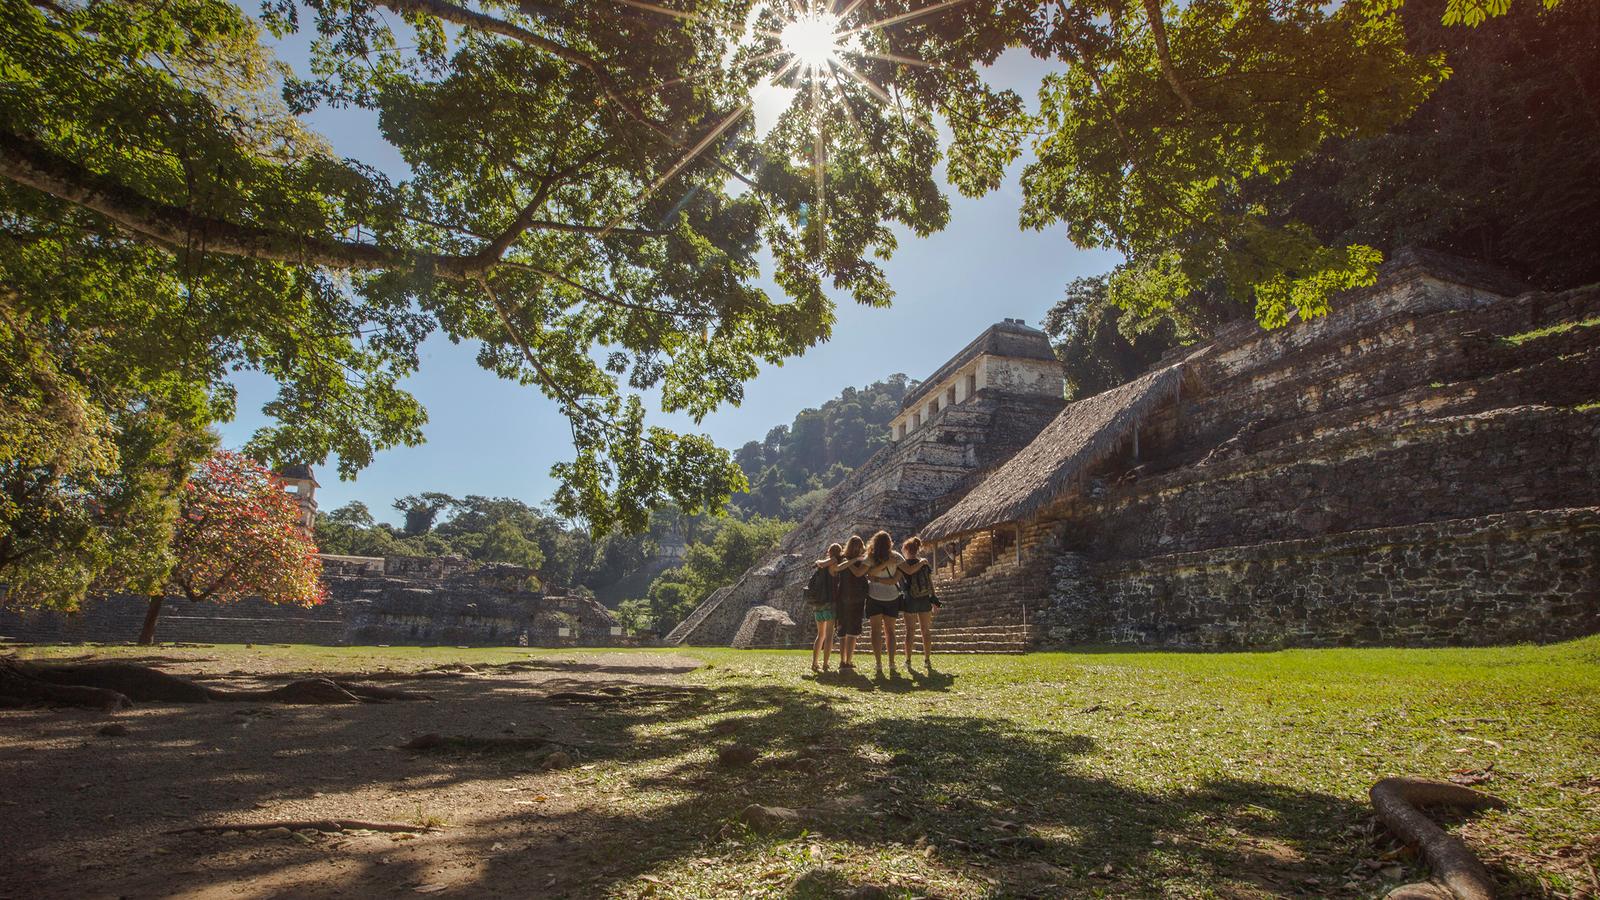 Mayan Discovery